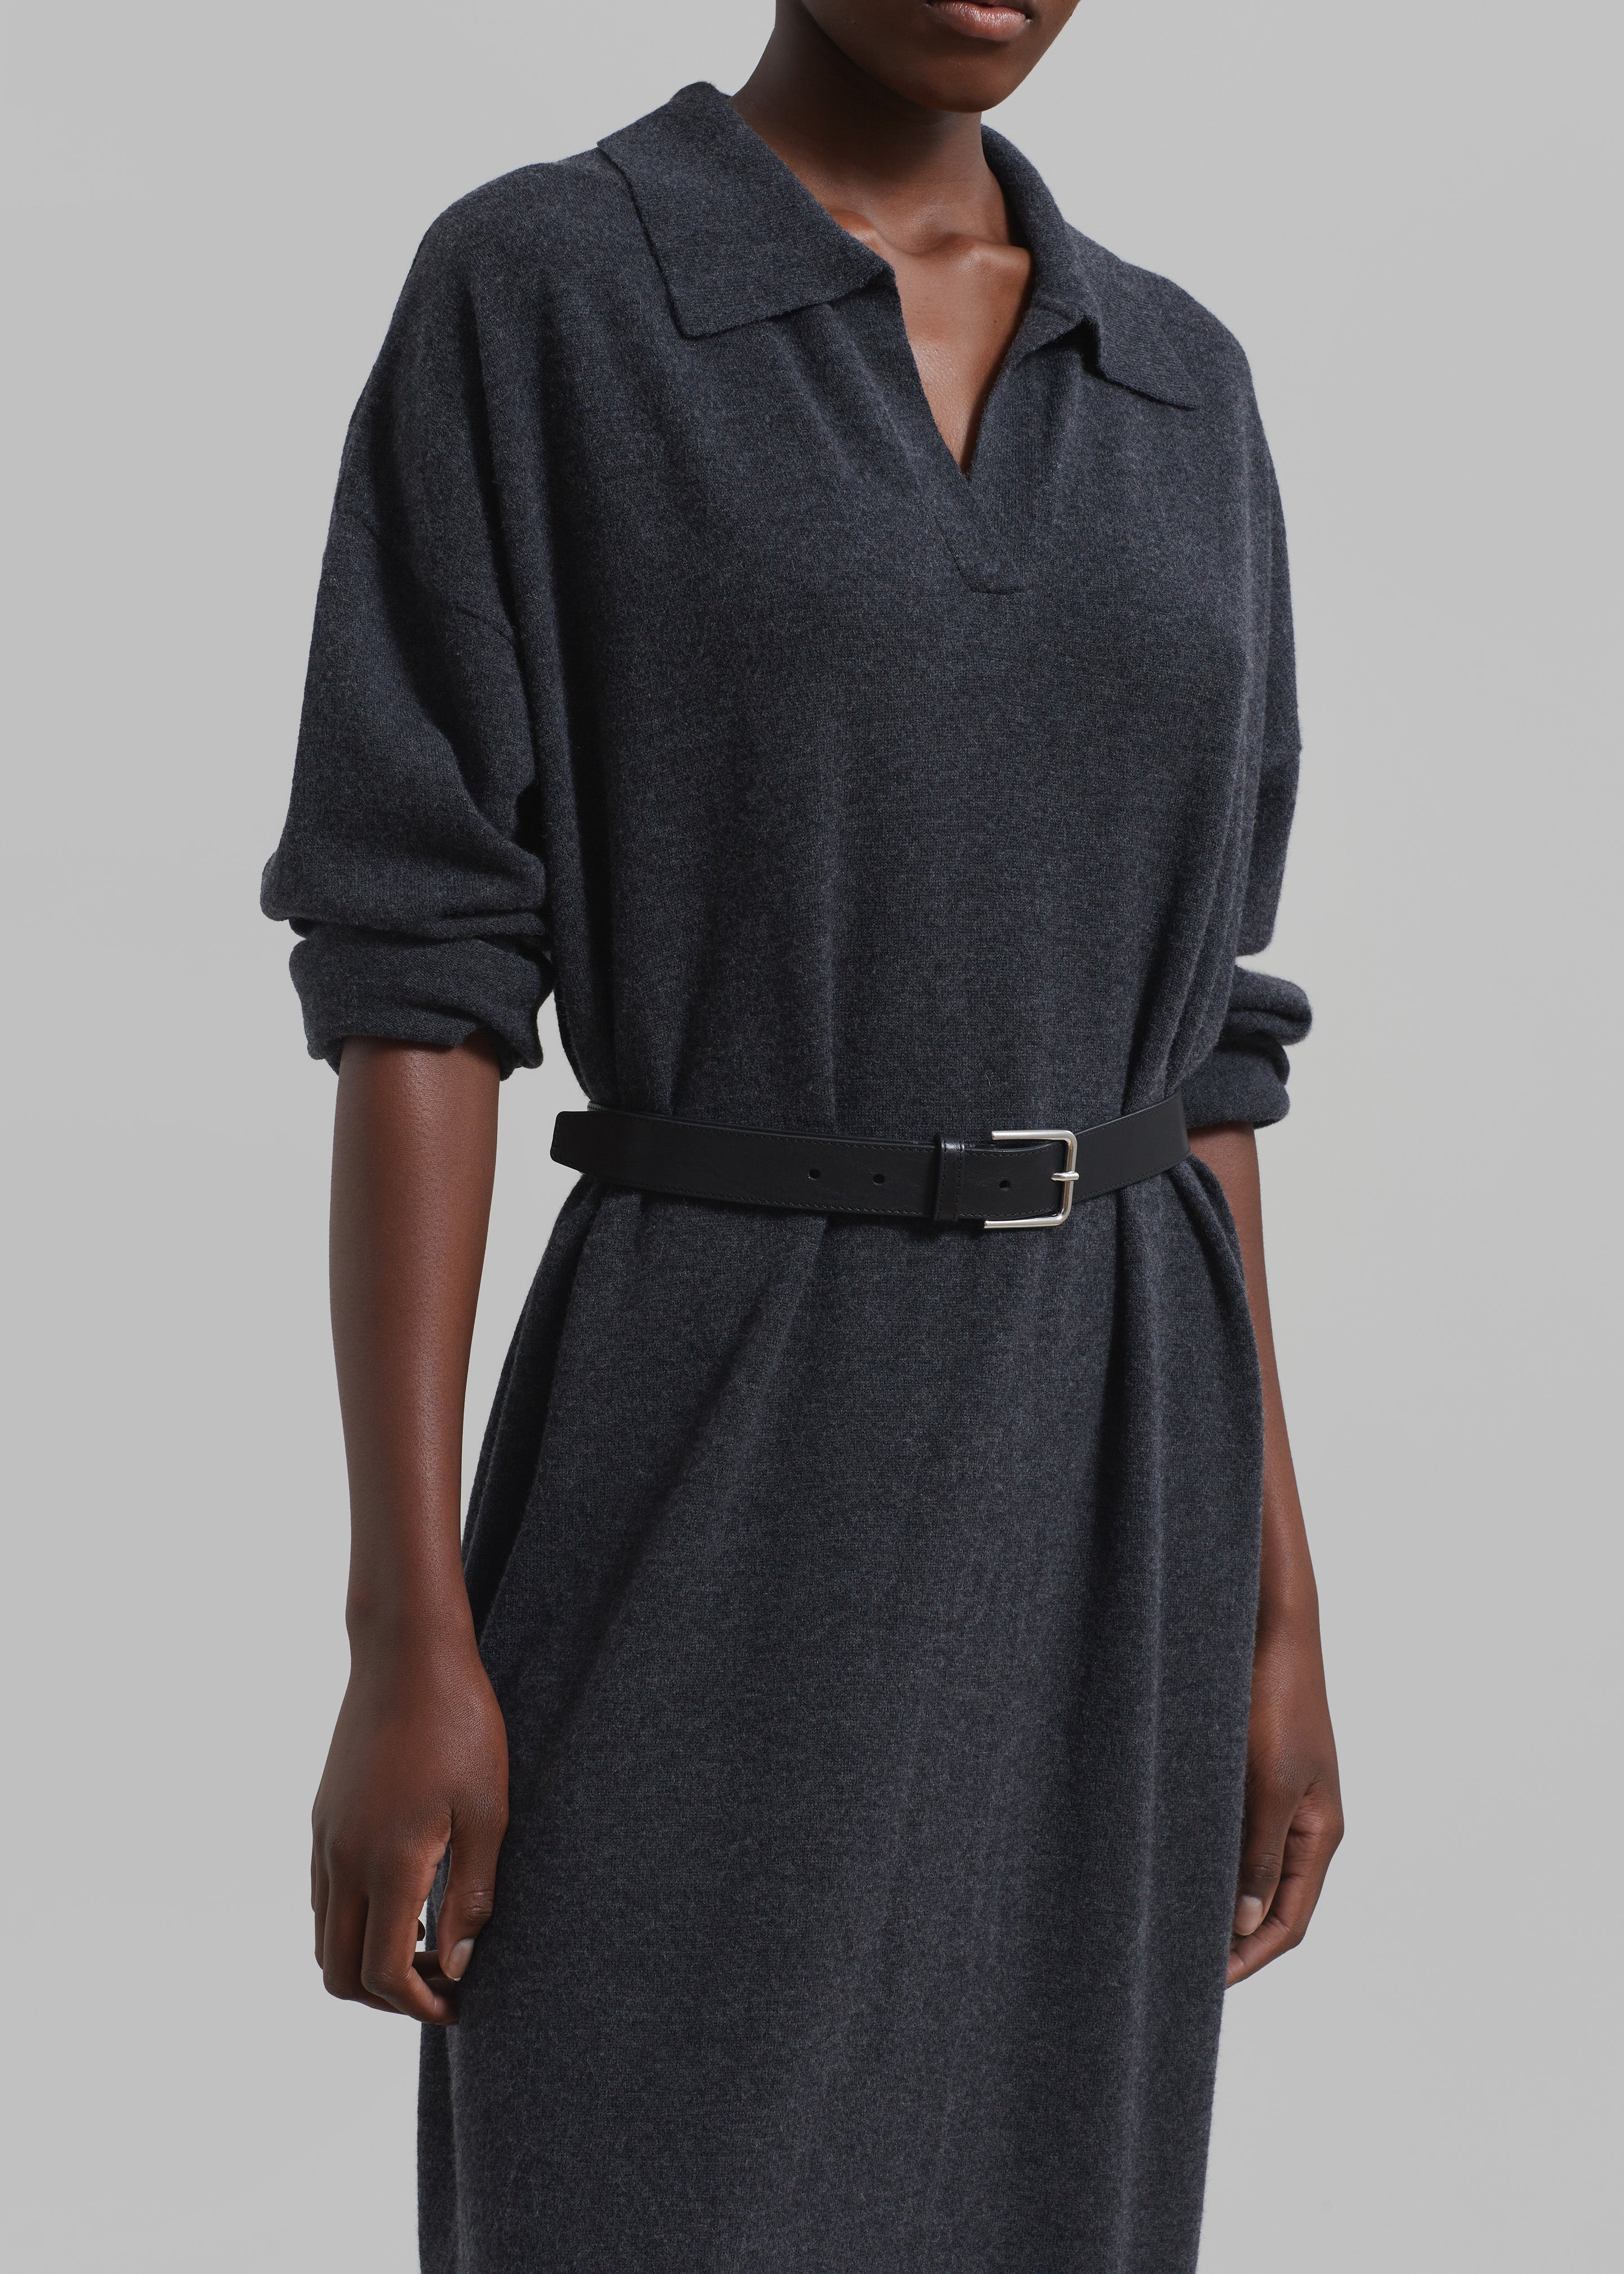 Siobhan Long Knit Dress - Charcoal - 7